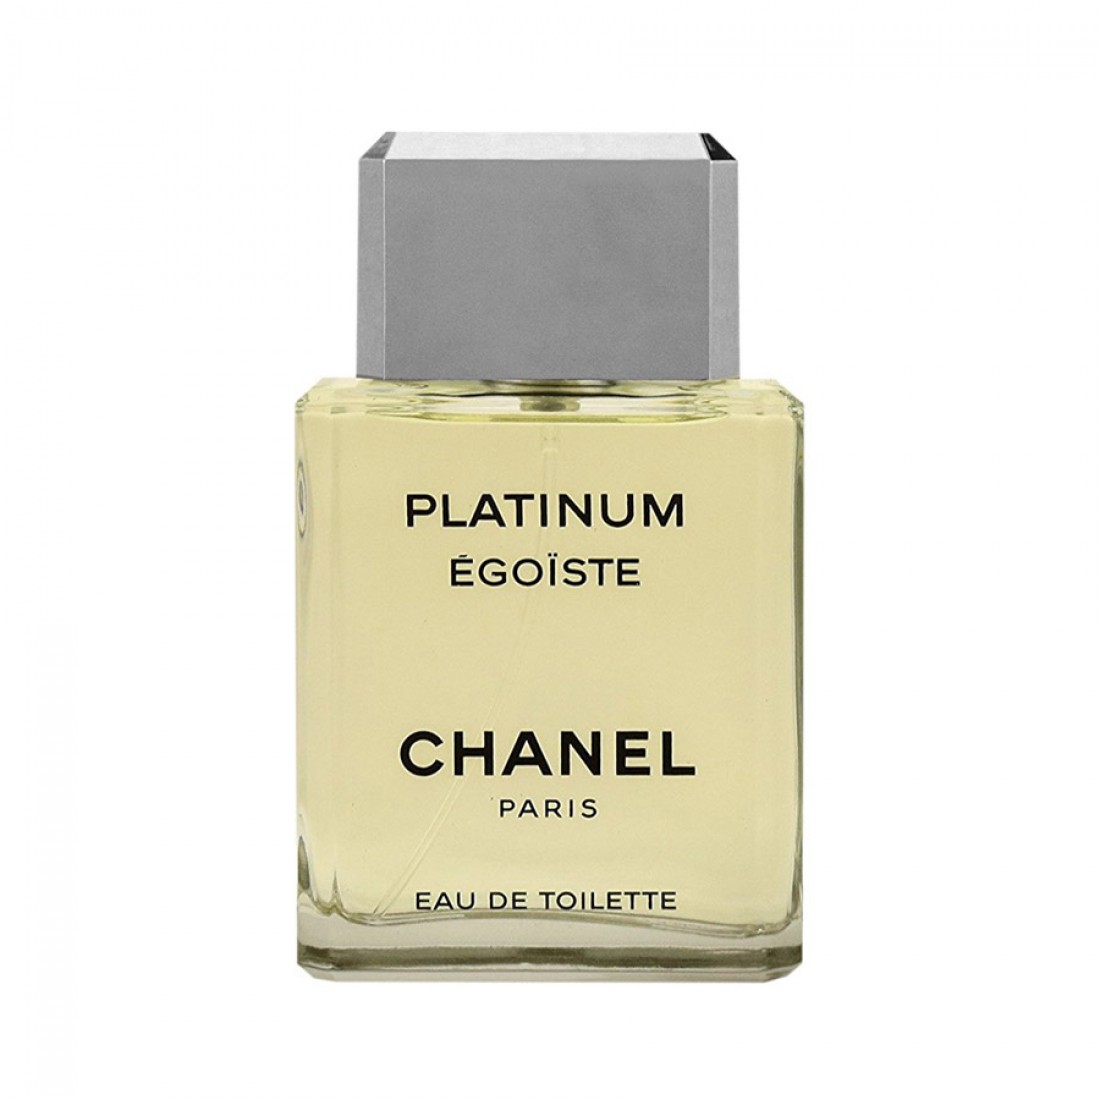 Платиновый эгоист. Chanel Egoist men Platinum 100мл. Chanel Egoiste Platinum///Platinum for men. Chanel Egoiste Platinum 100ml. Platinum Egoiste "Chanel" 100ml men.